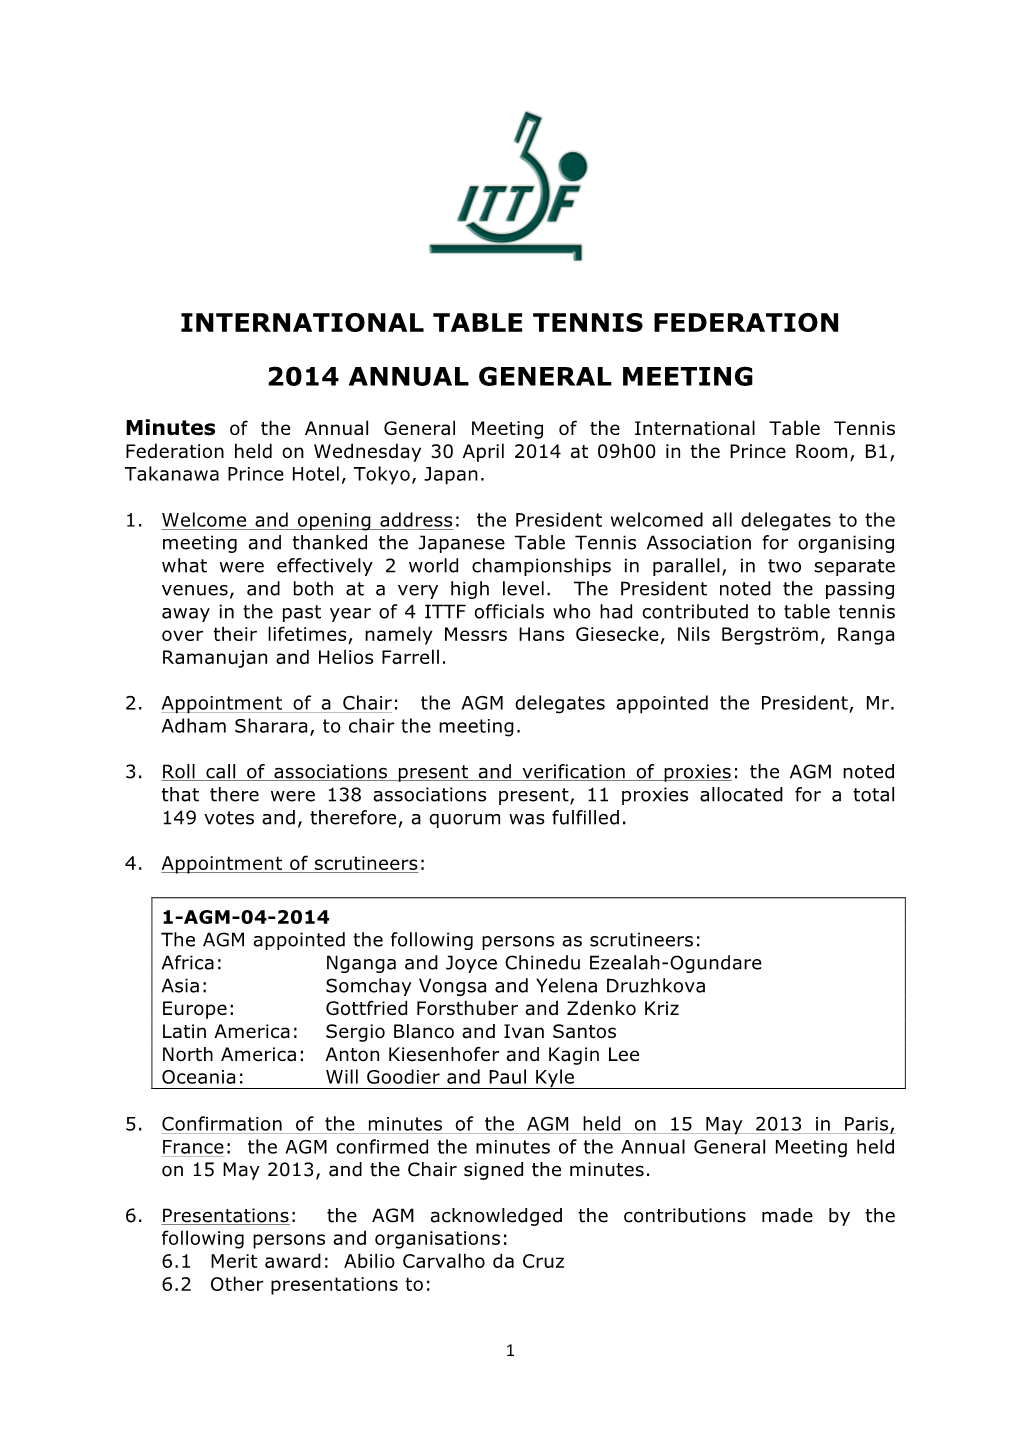 International Table Tennis Federation 2014 Annual General Meeting